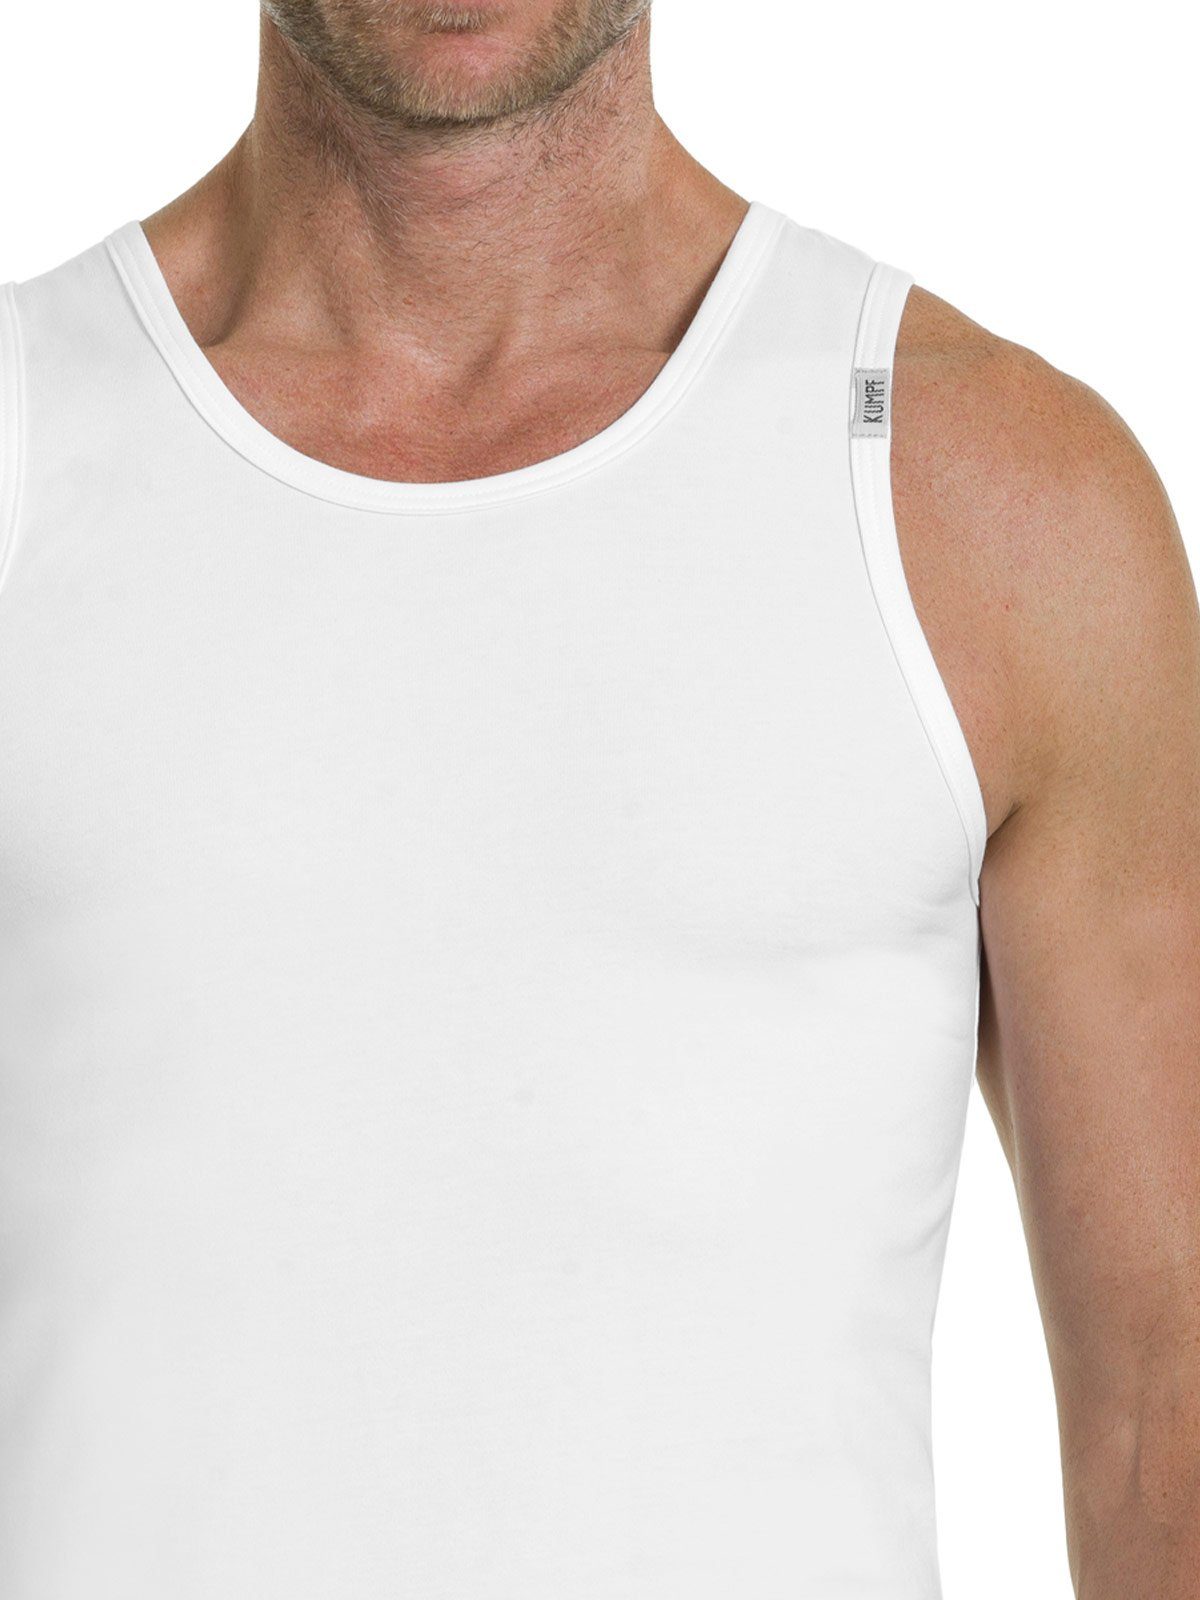 Unterhemd hohe weiss KUMPF Bio Herren Achselhemd 1-St) Cotton Markenqualität (Stück,